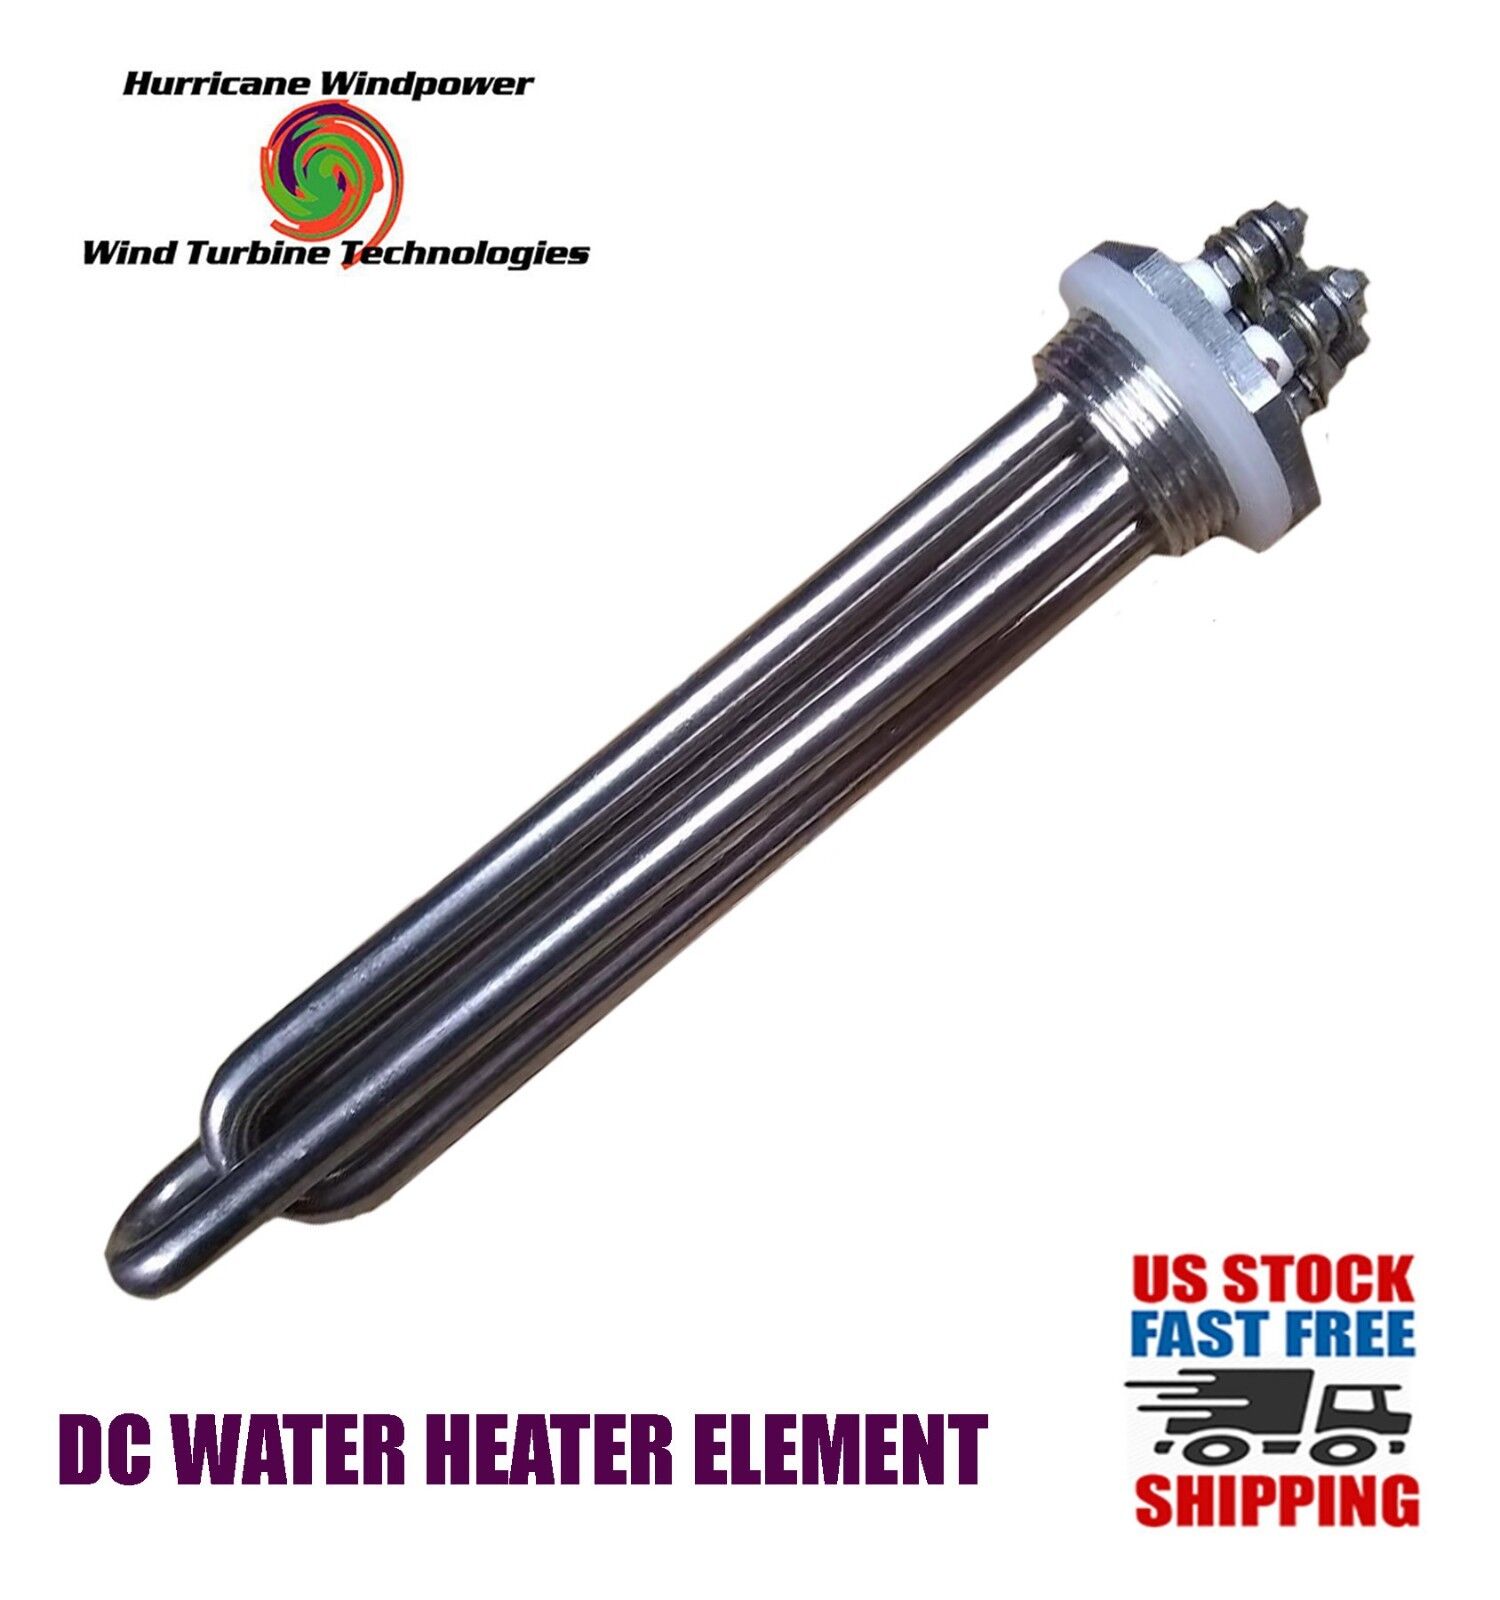 DC Water Heater Element 12 Volt 300 Watt for Wind Generator Solar Water Heating